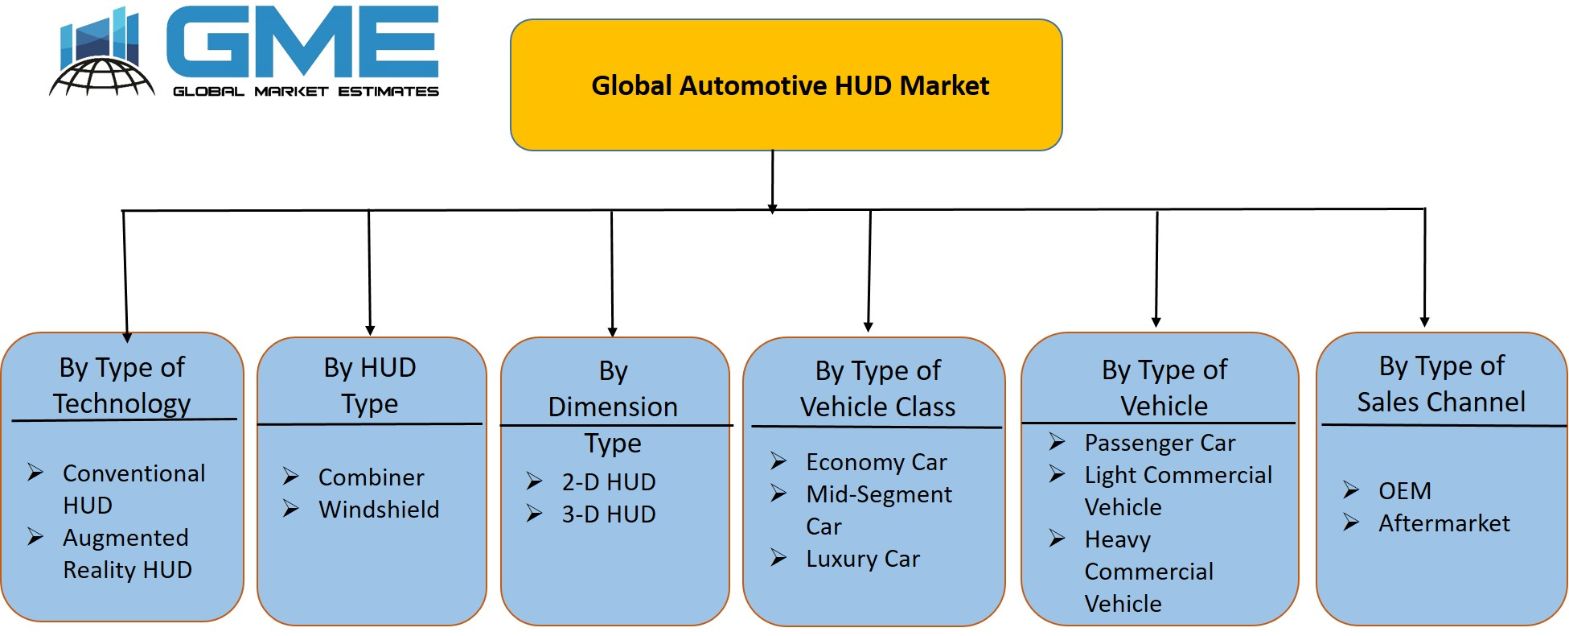 Automotive HUD Market - Segmentation